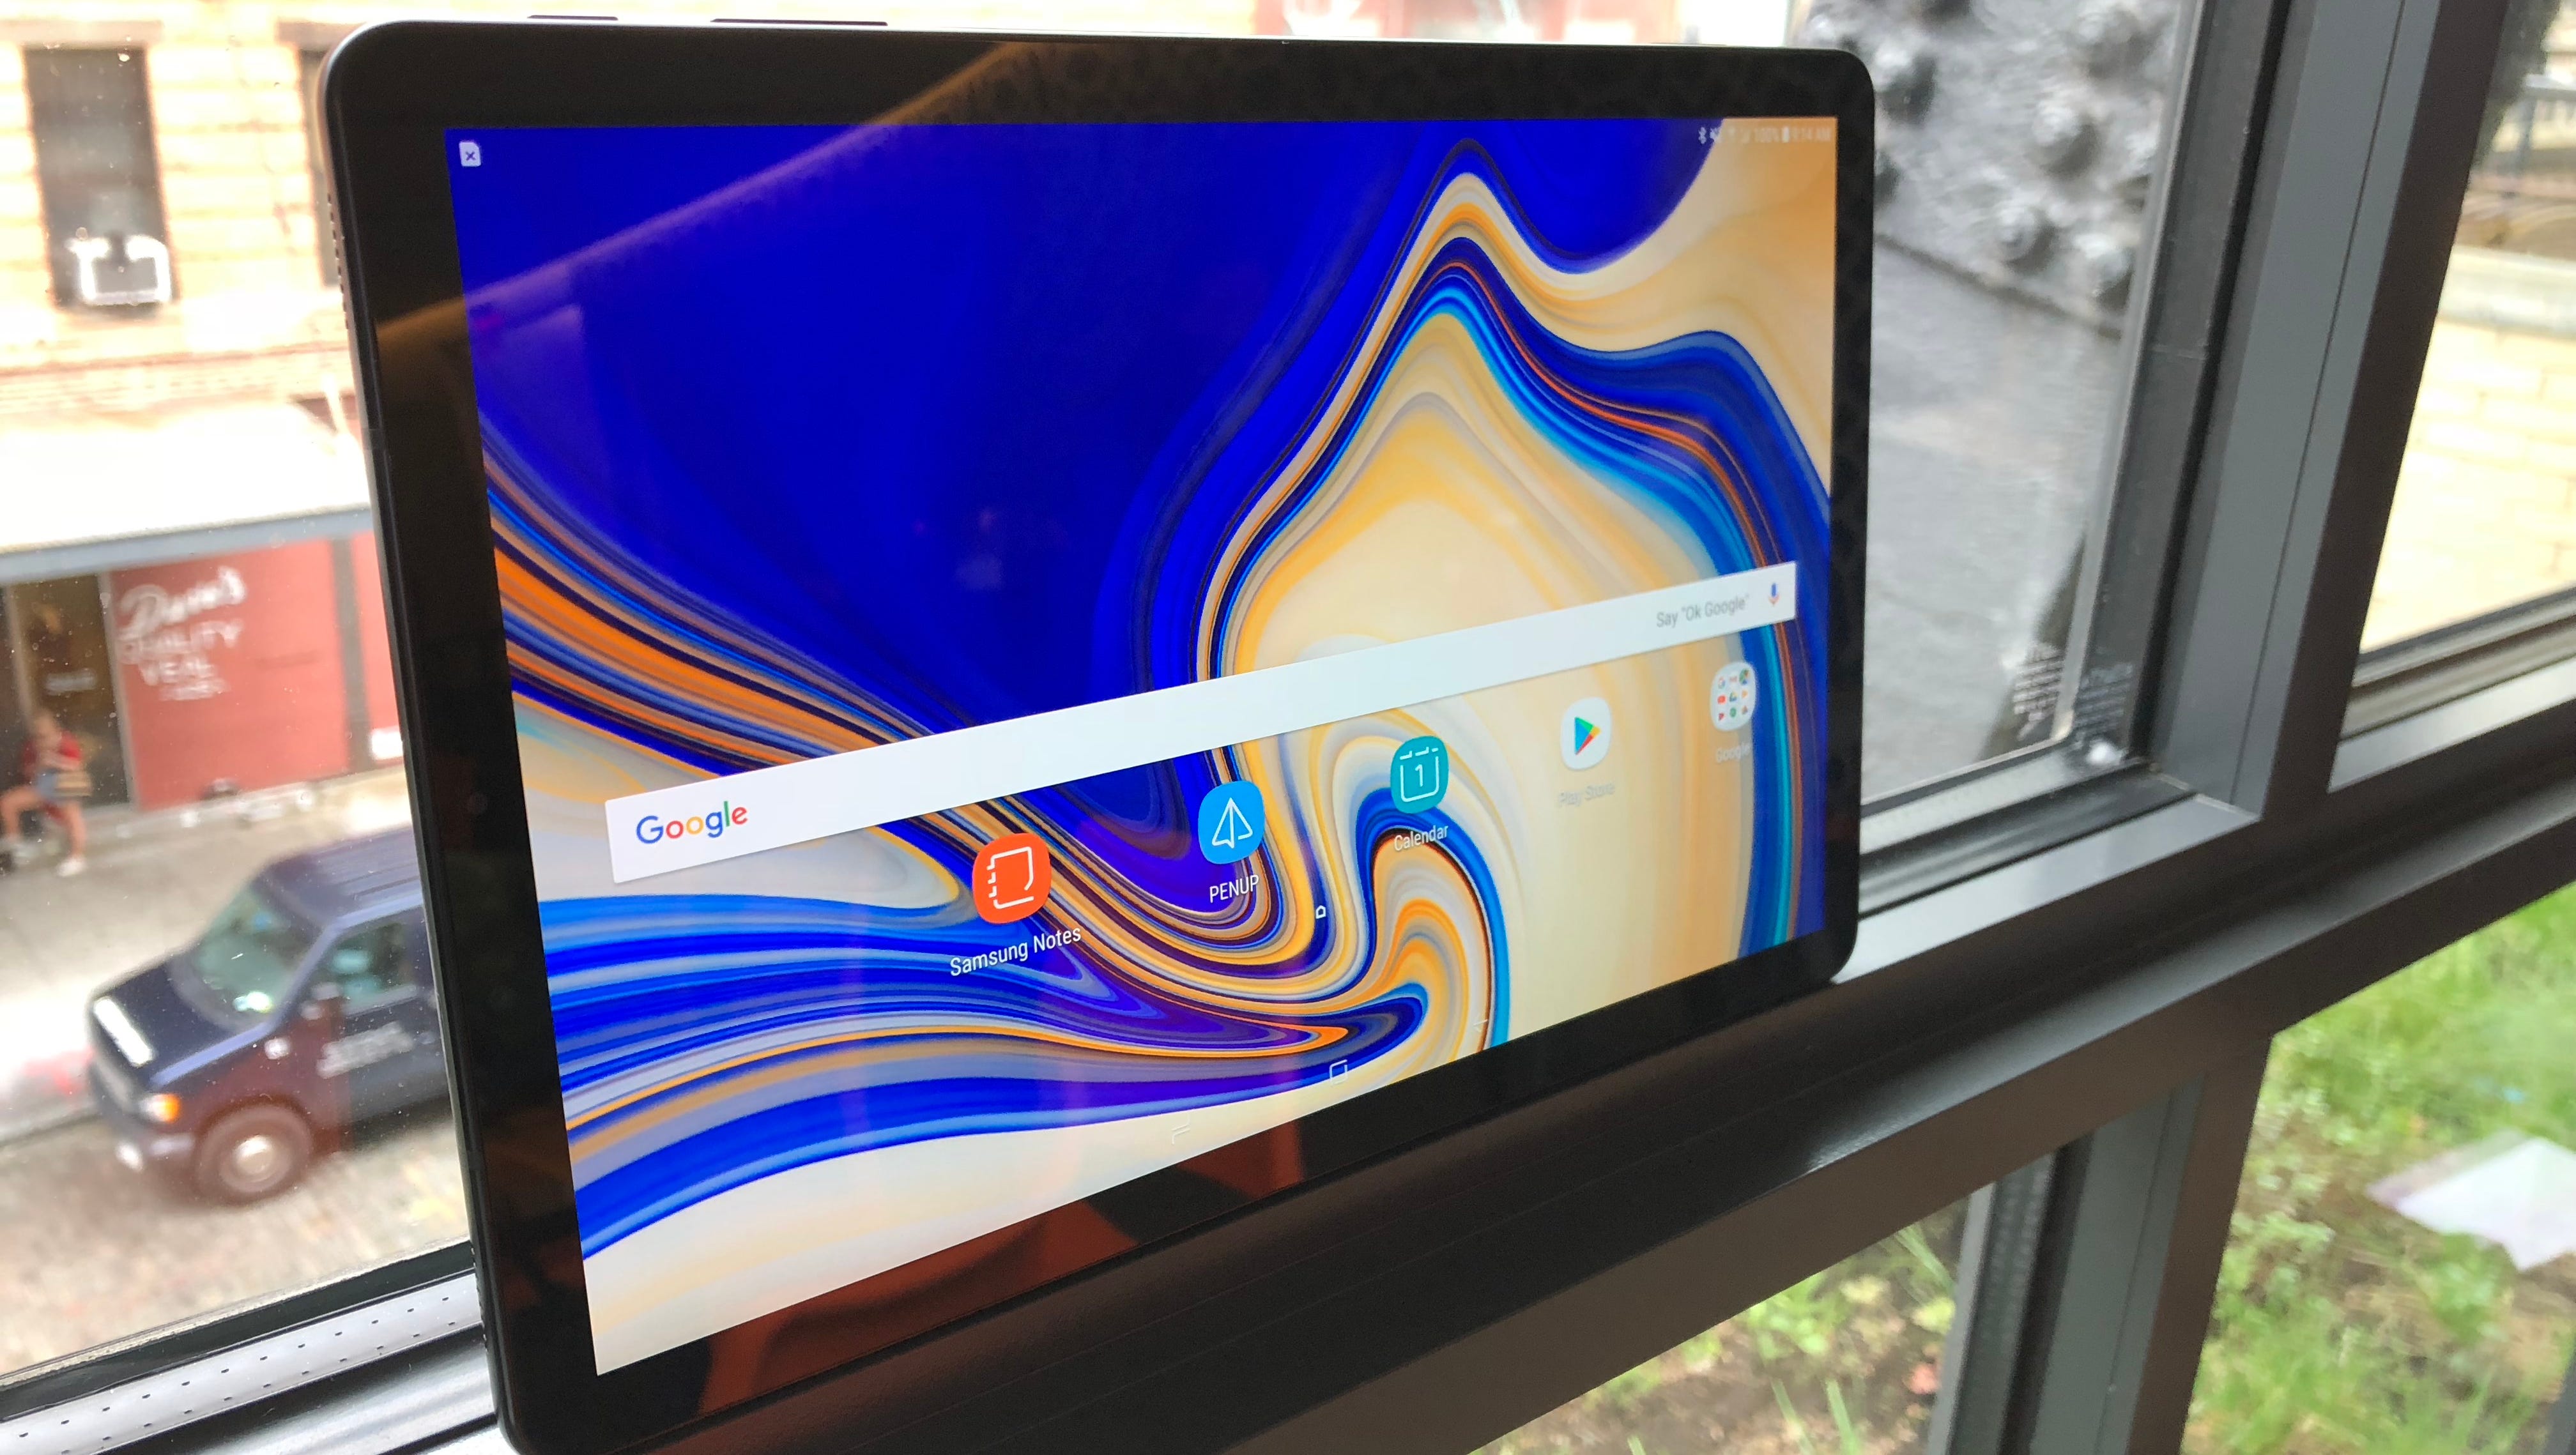 Samsung S New Galaxy Tab S4 Takes On Ipad Pro Laptops